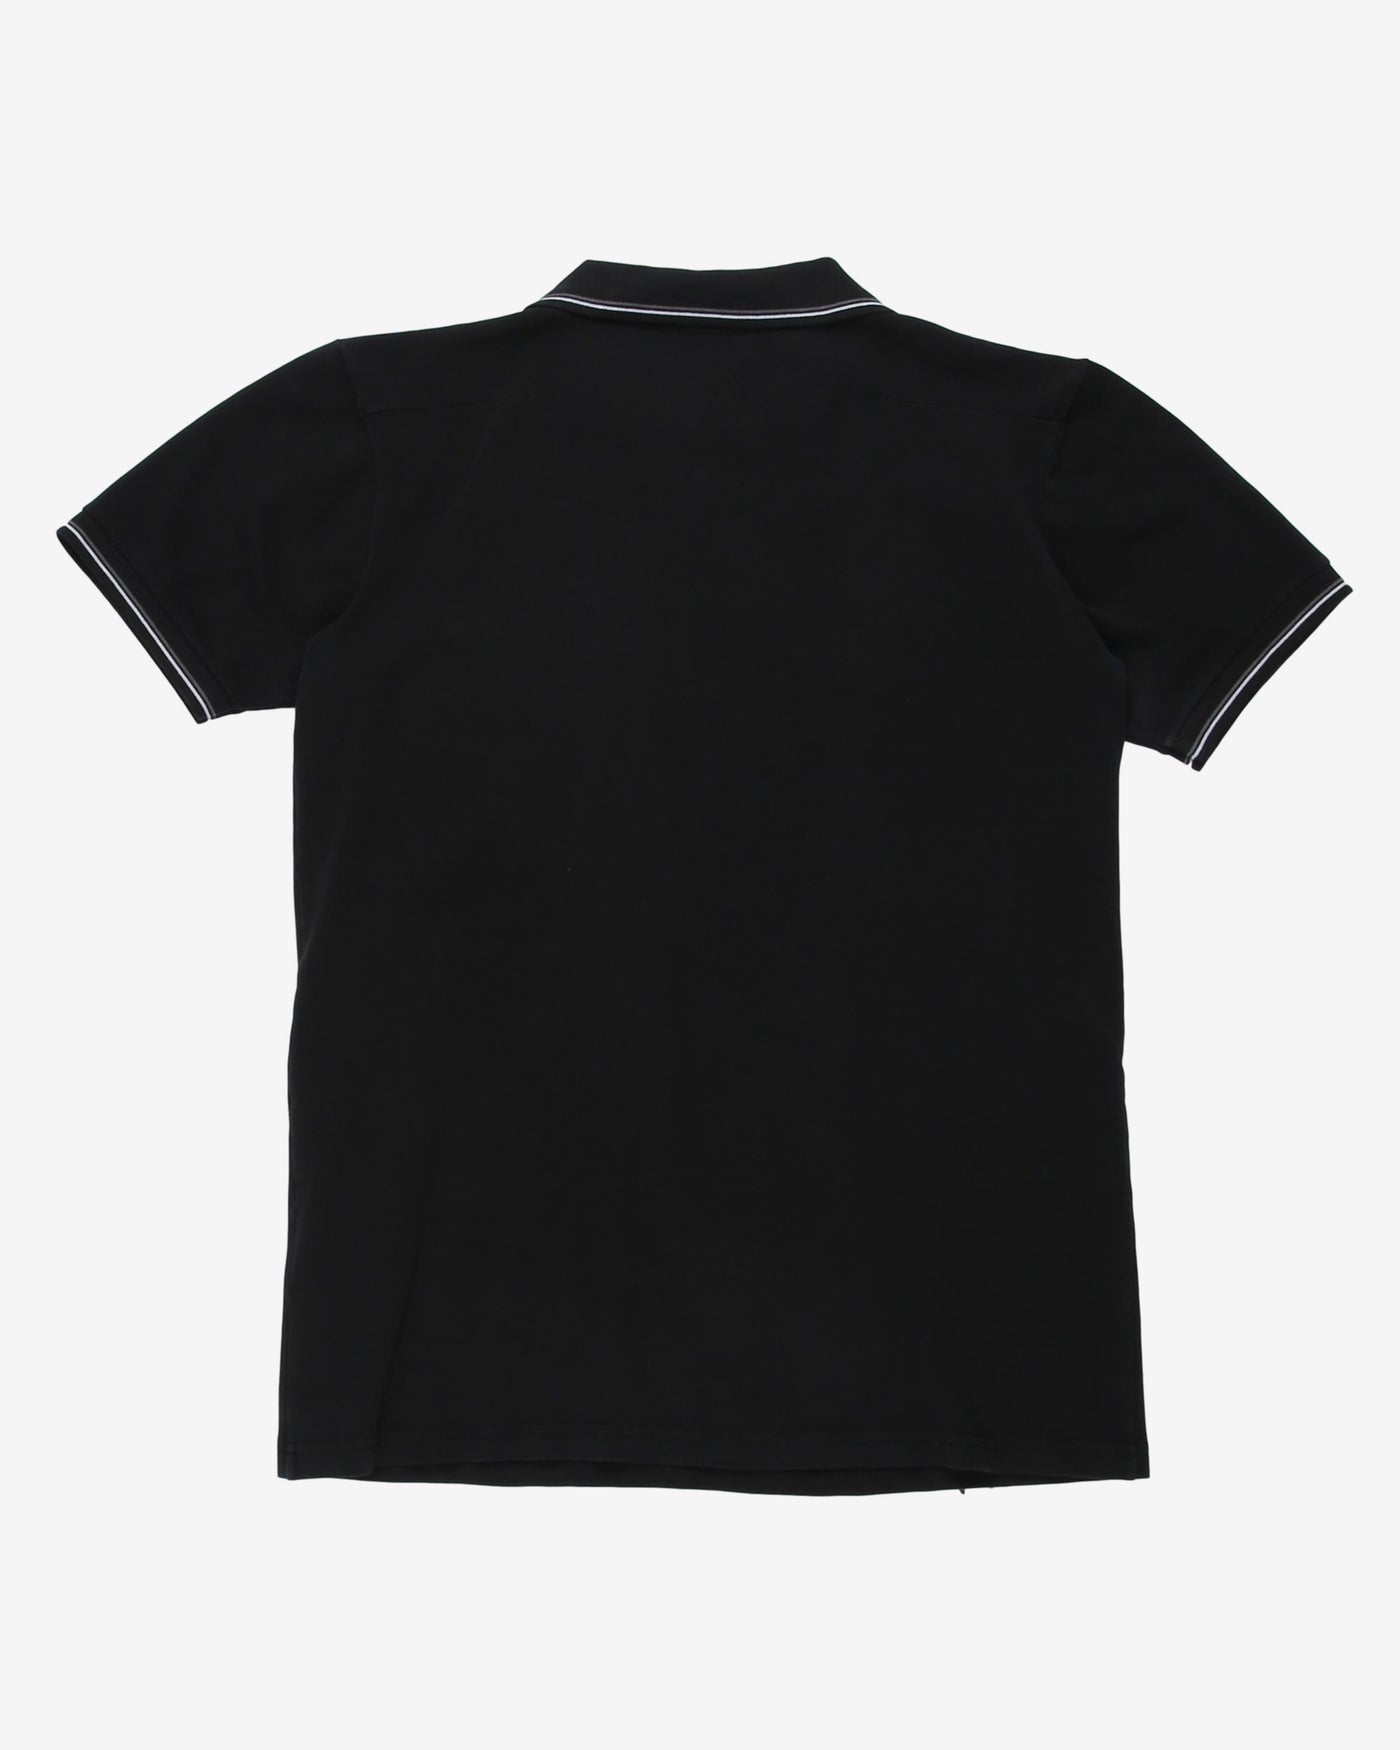 Dior Black Embroidered Logo Pocket Polo Shirt - XS